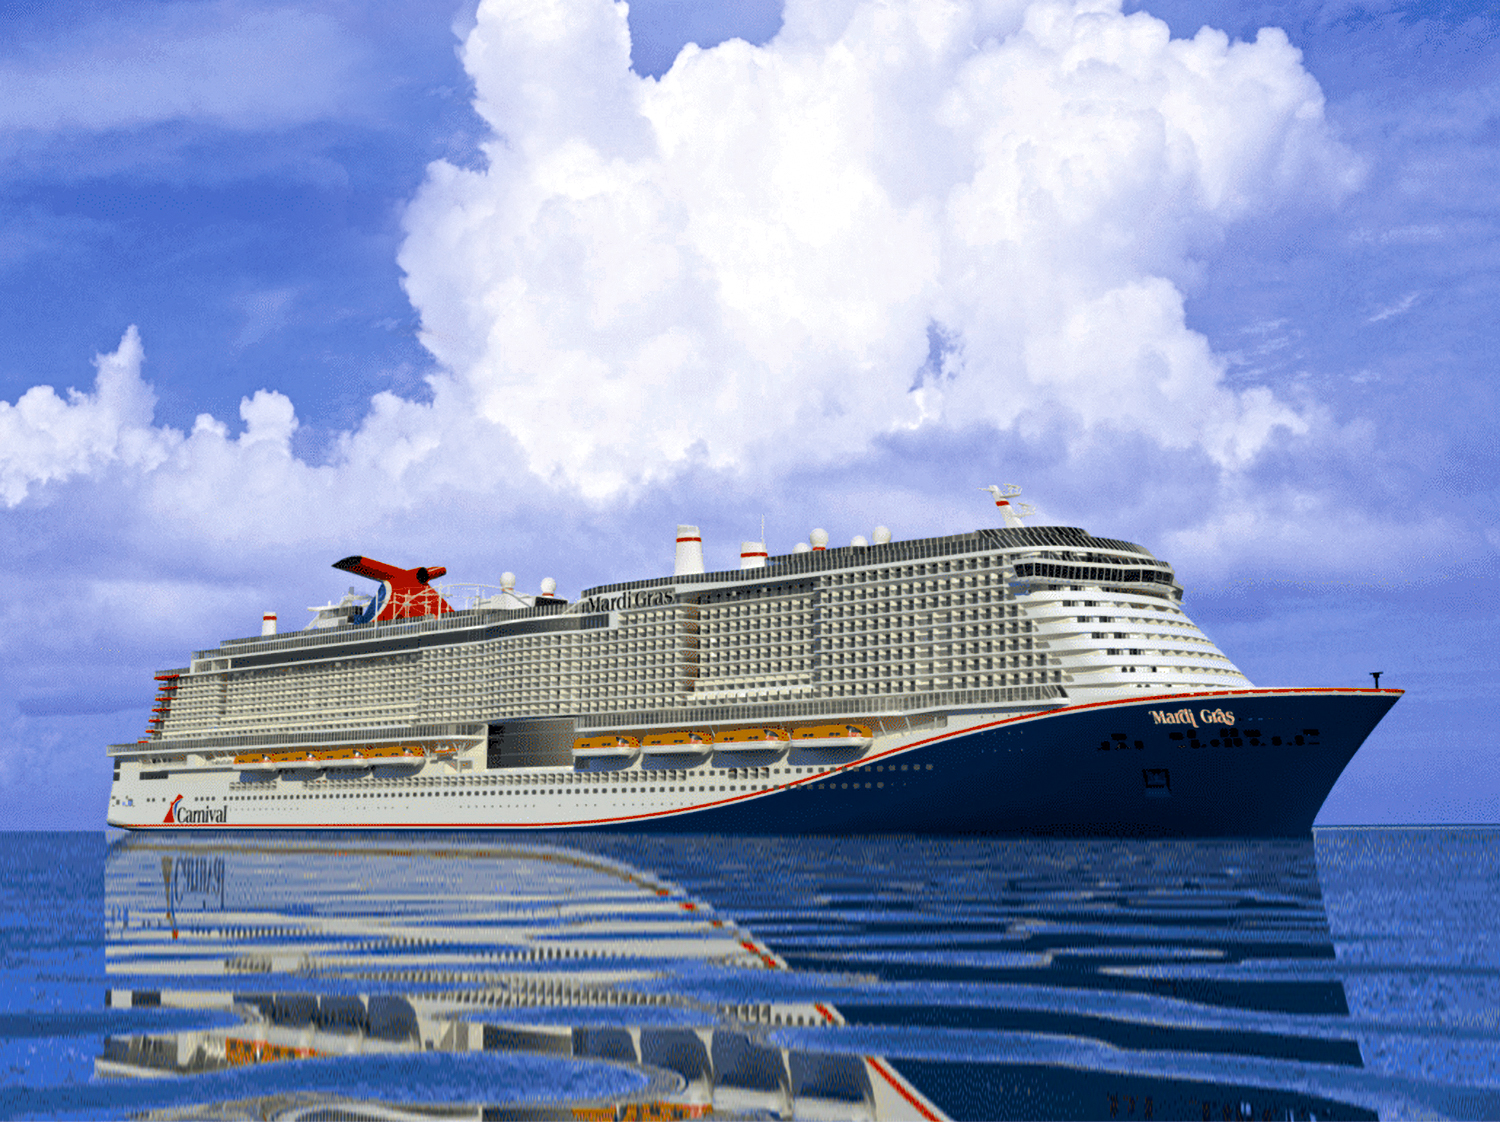 new cruise ship at port canaveral